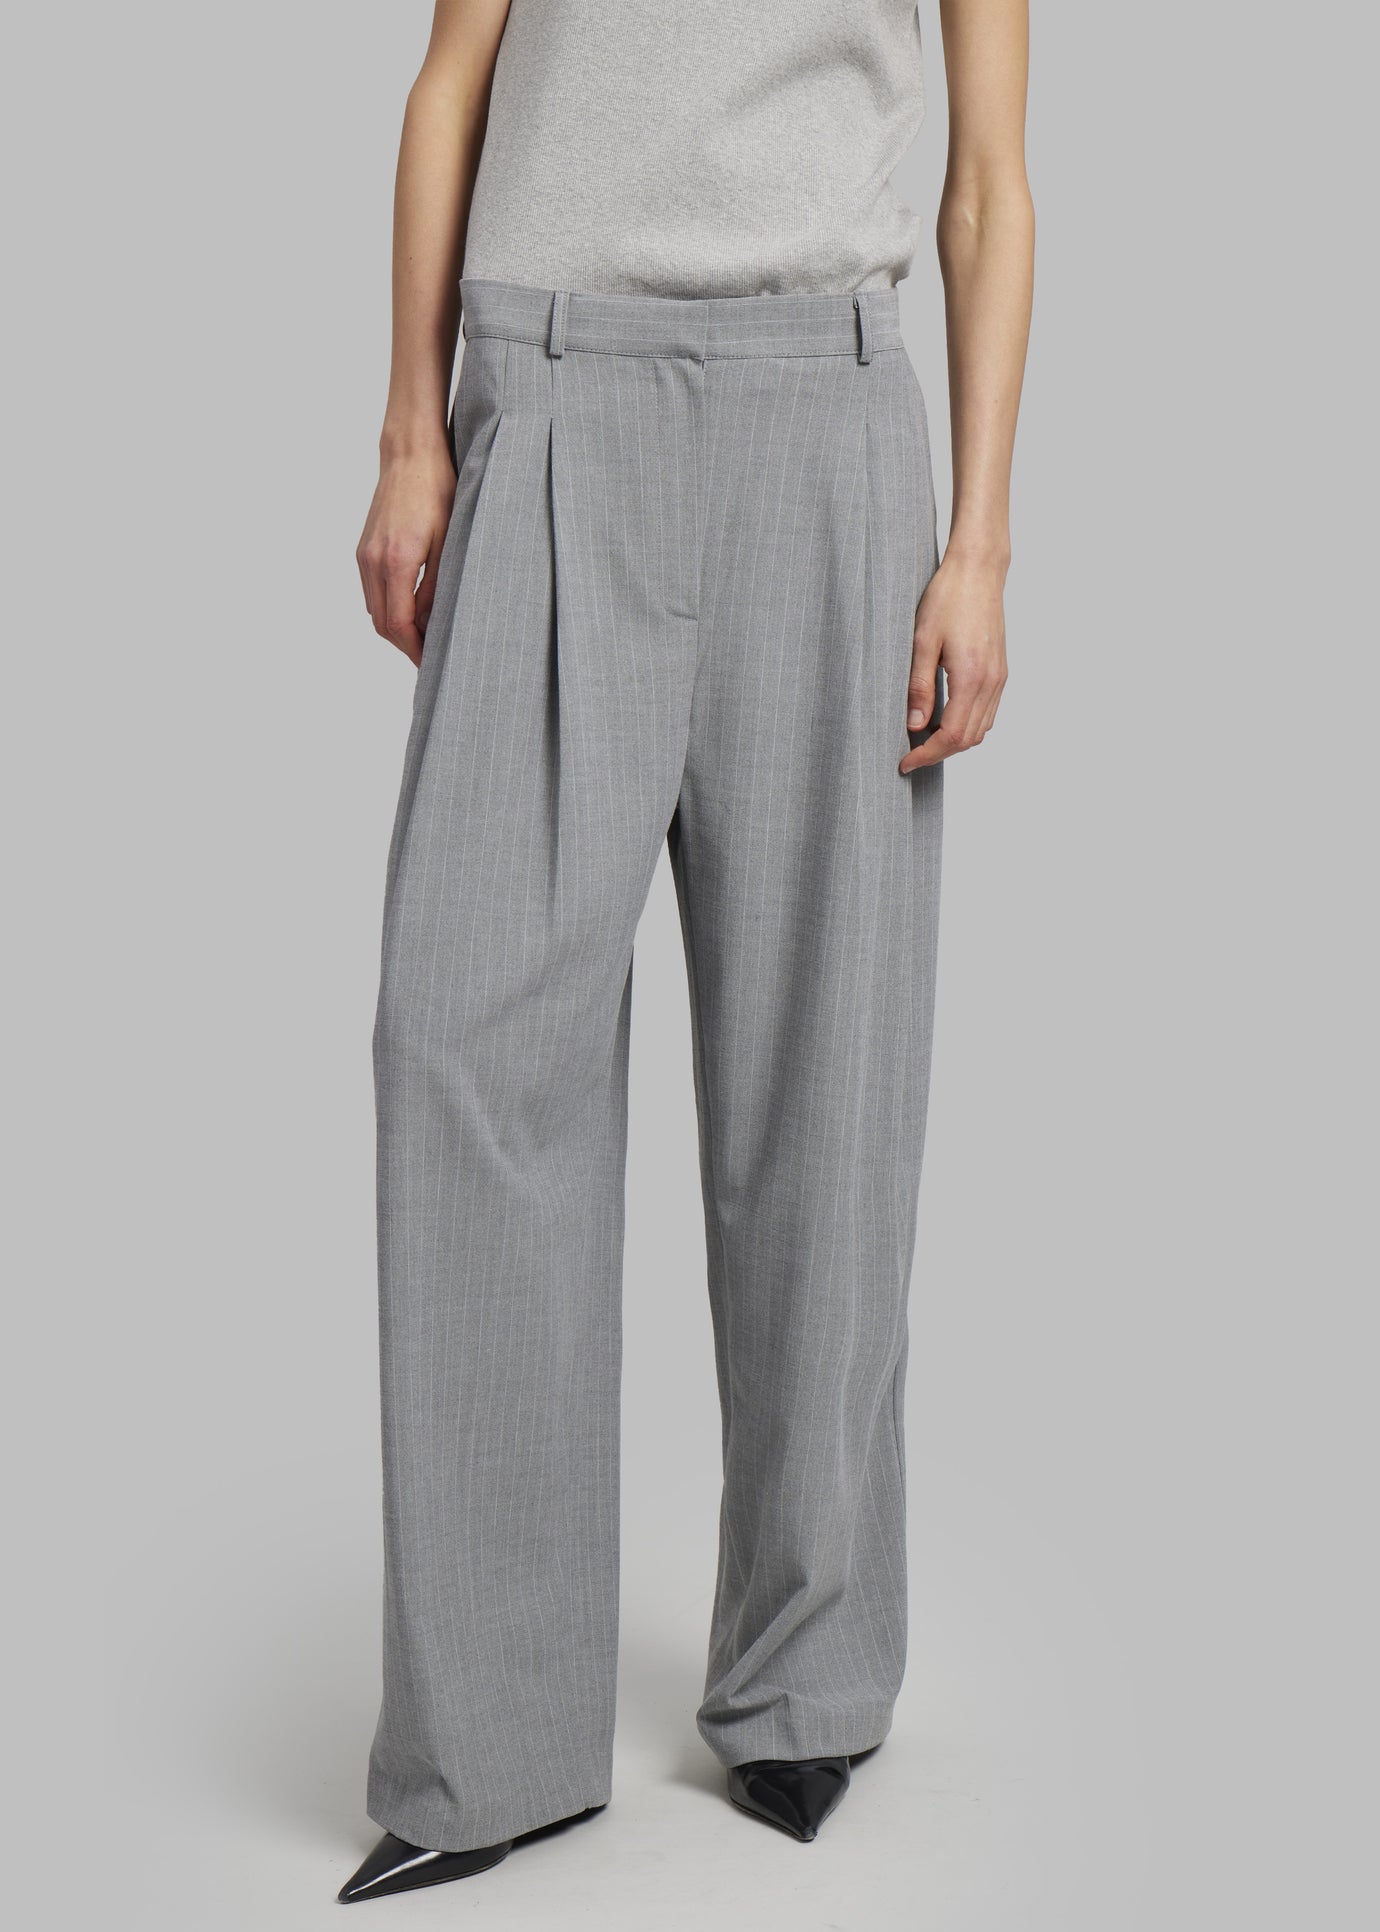 Sybil Trousers - Grey Pinstripe - 1